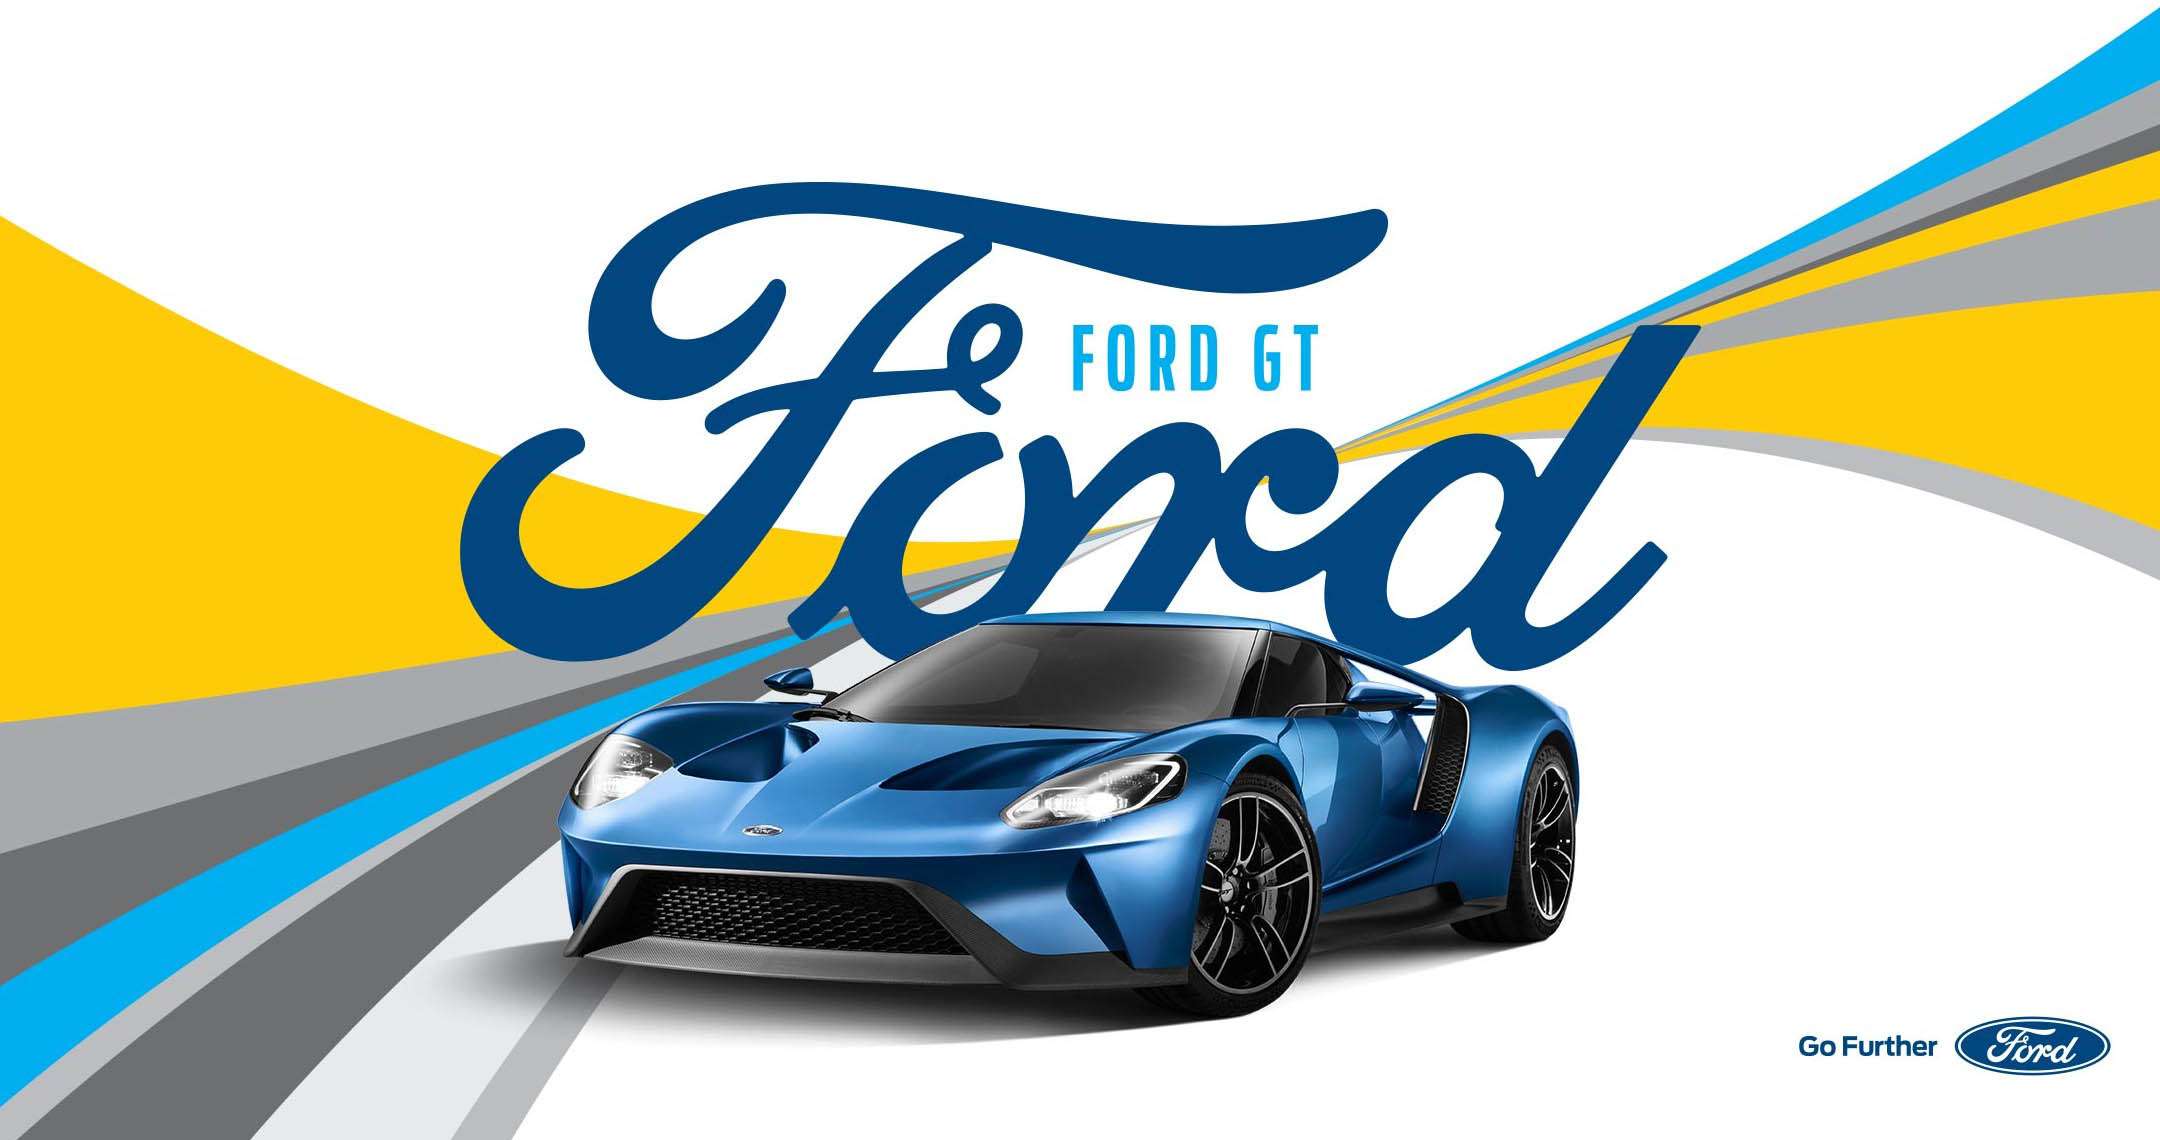 Ford GT Logo - 2017 GT Supercar | me.ford.com